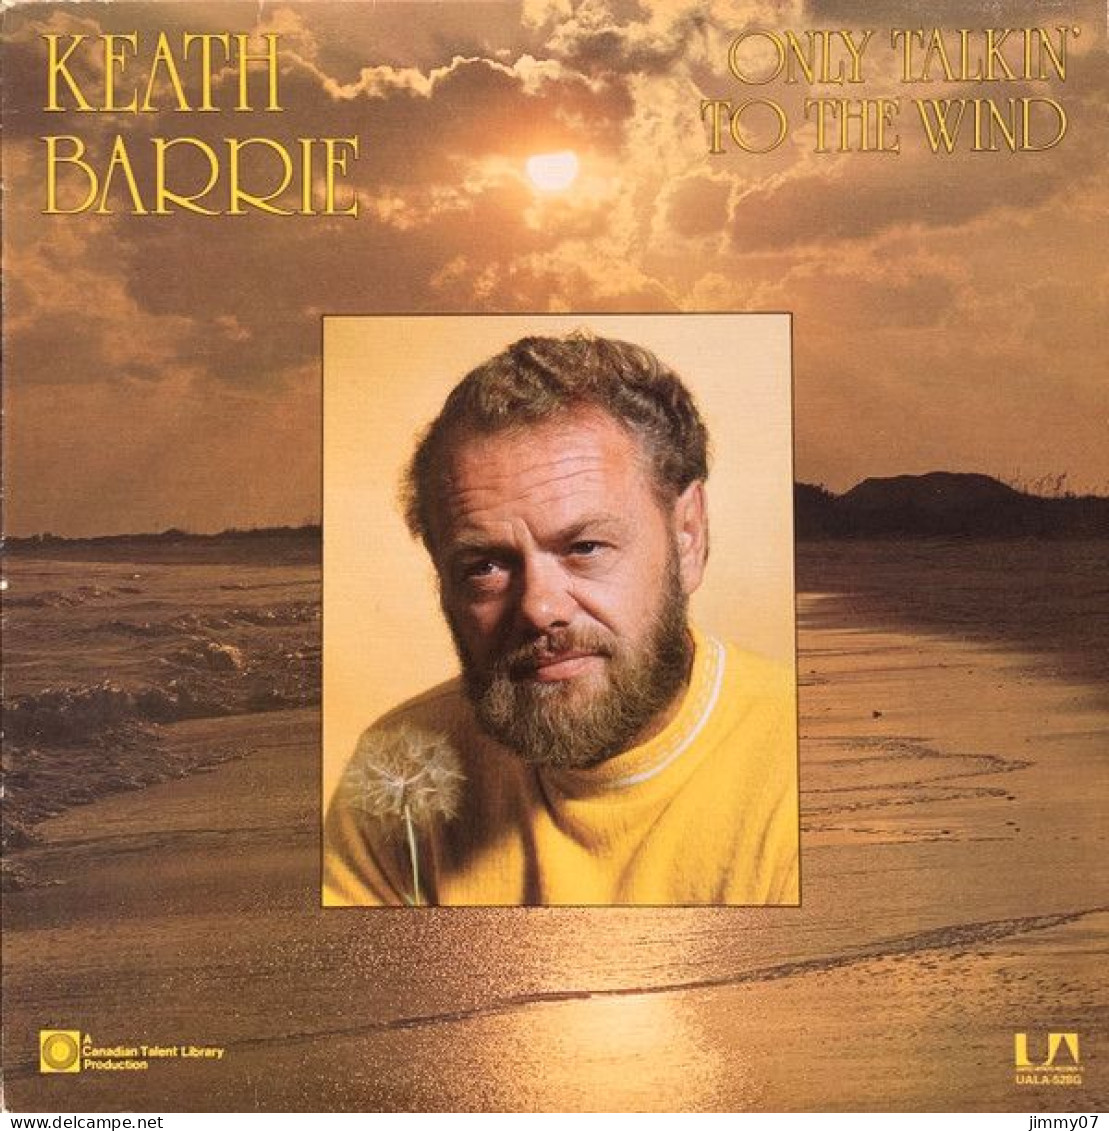 Keath Barrie - Only Talkin' To The Wind (LP, Album) - Disco & Pop